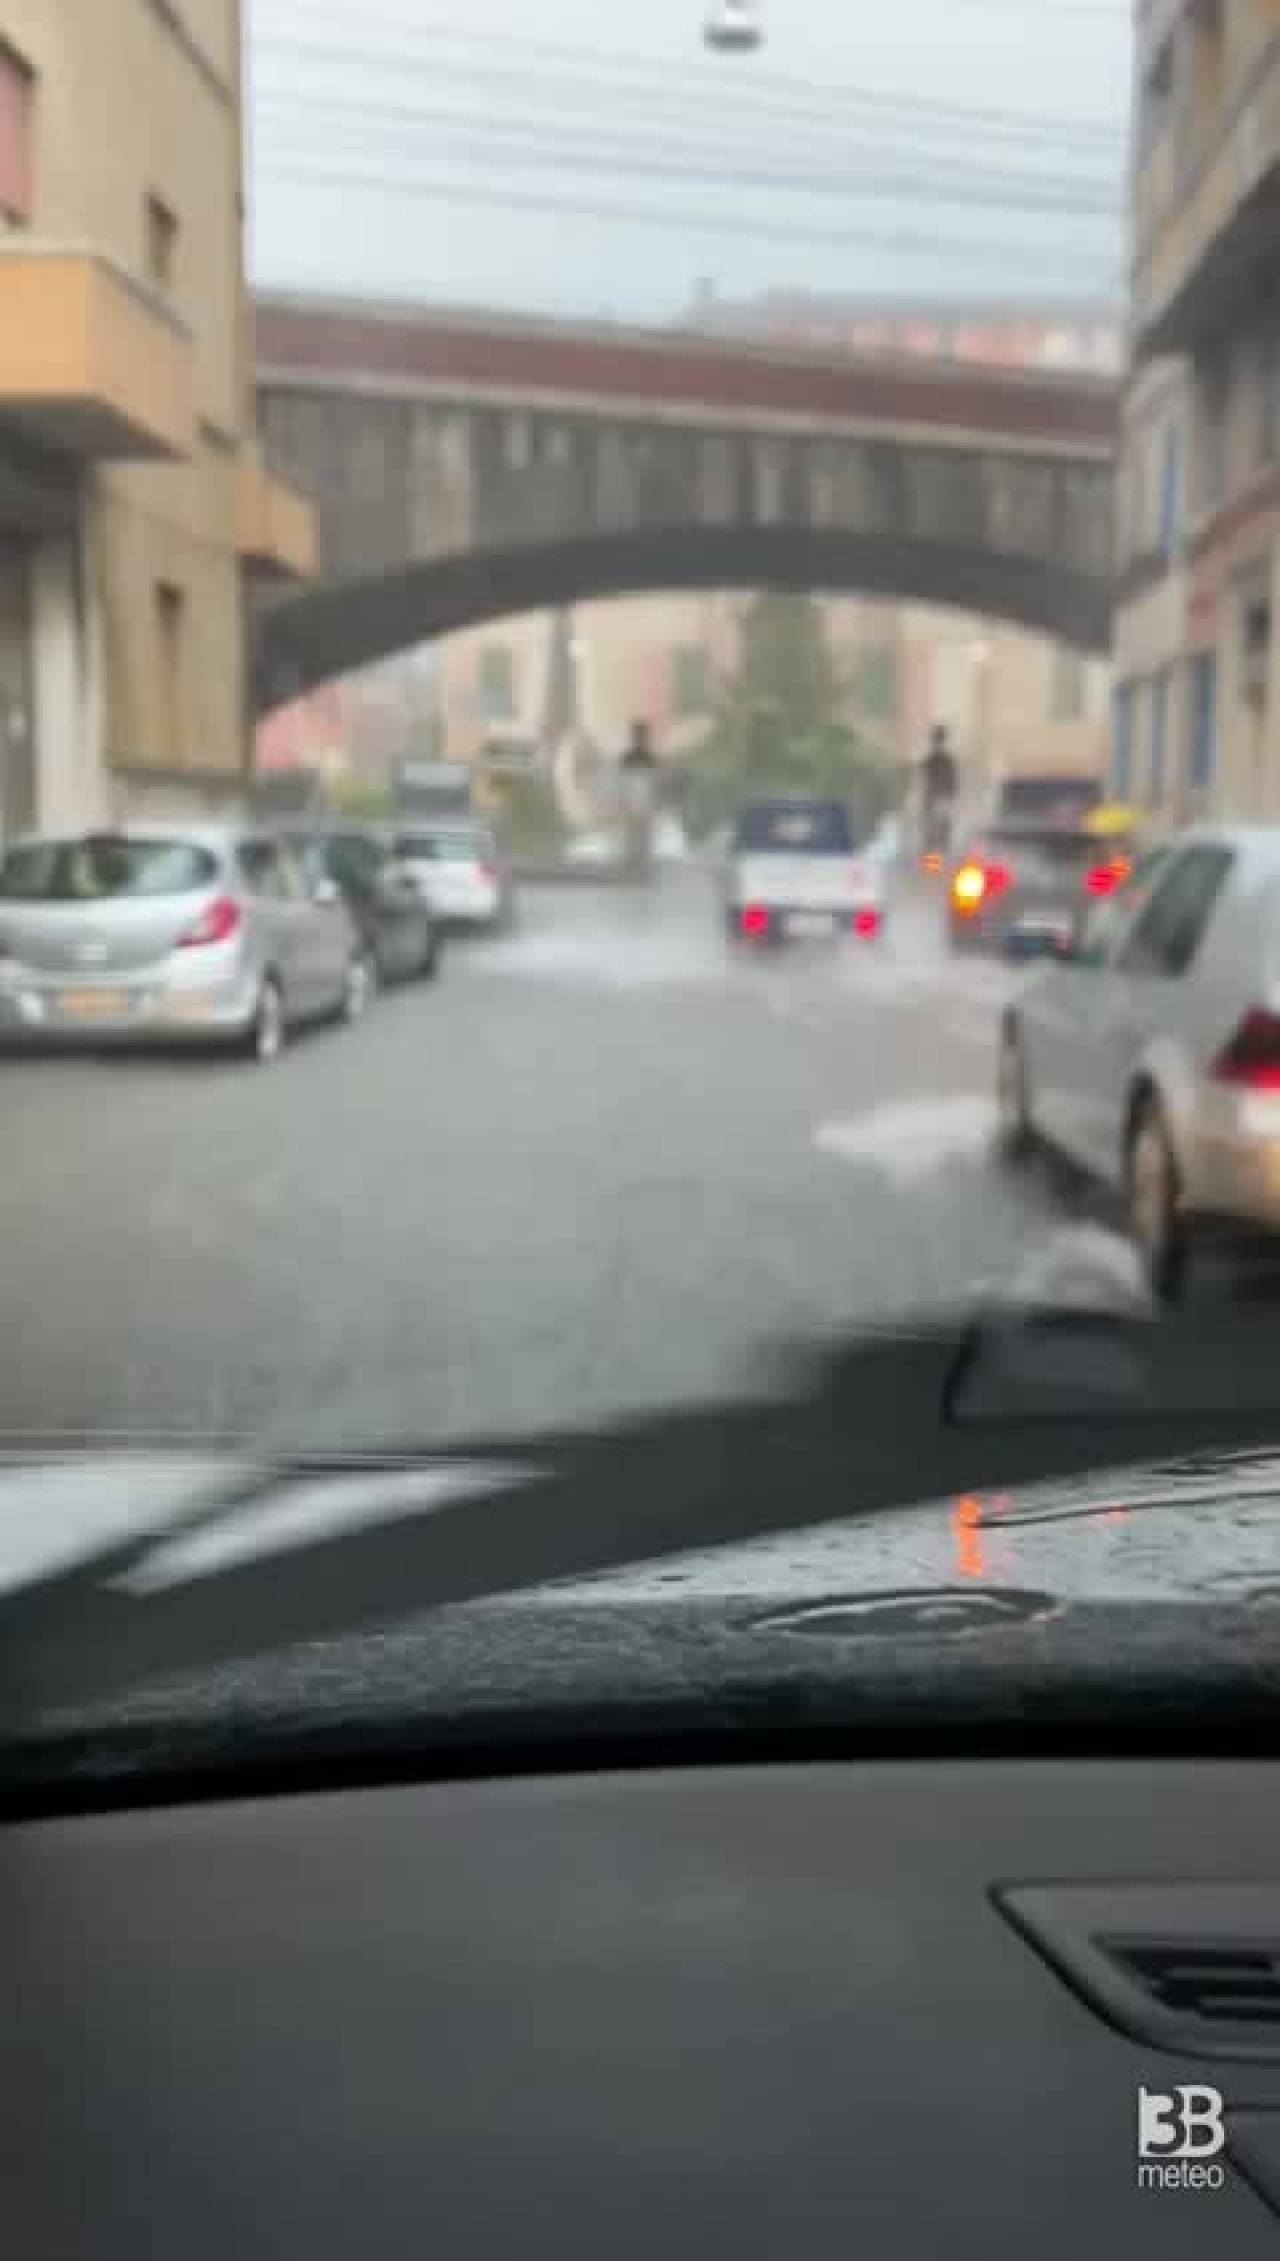 Cronaca meteo video: forte temporale a Genova